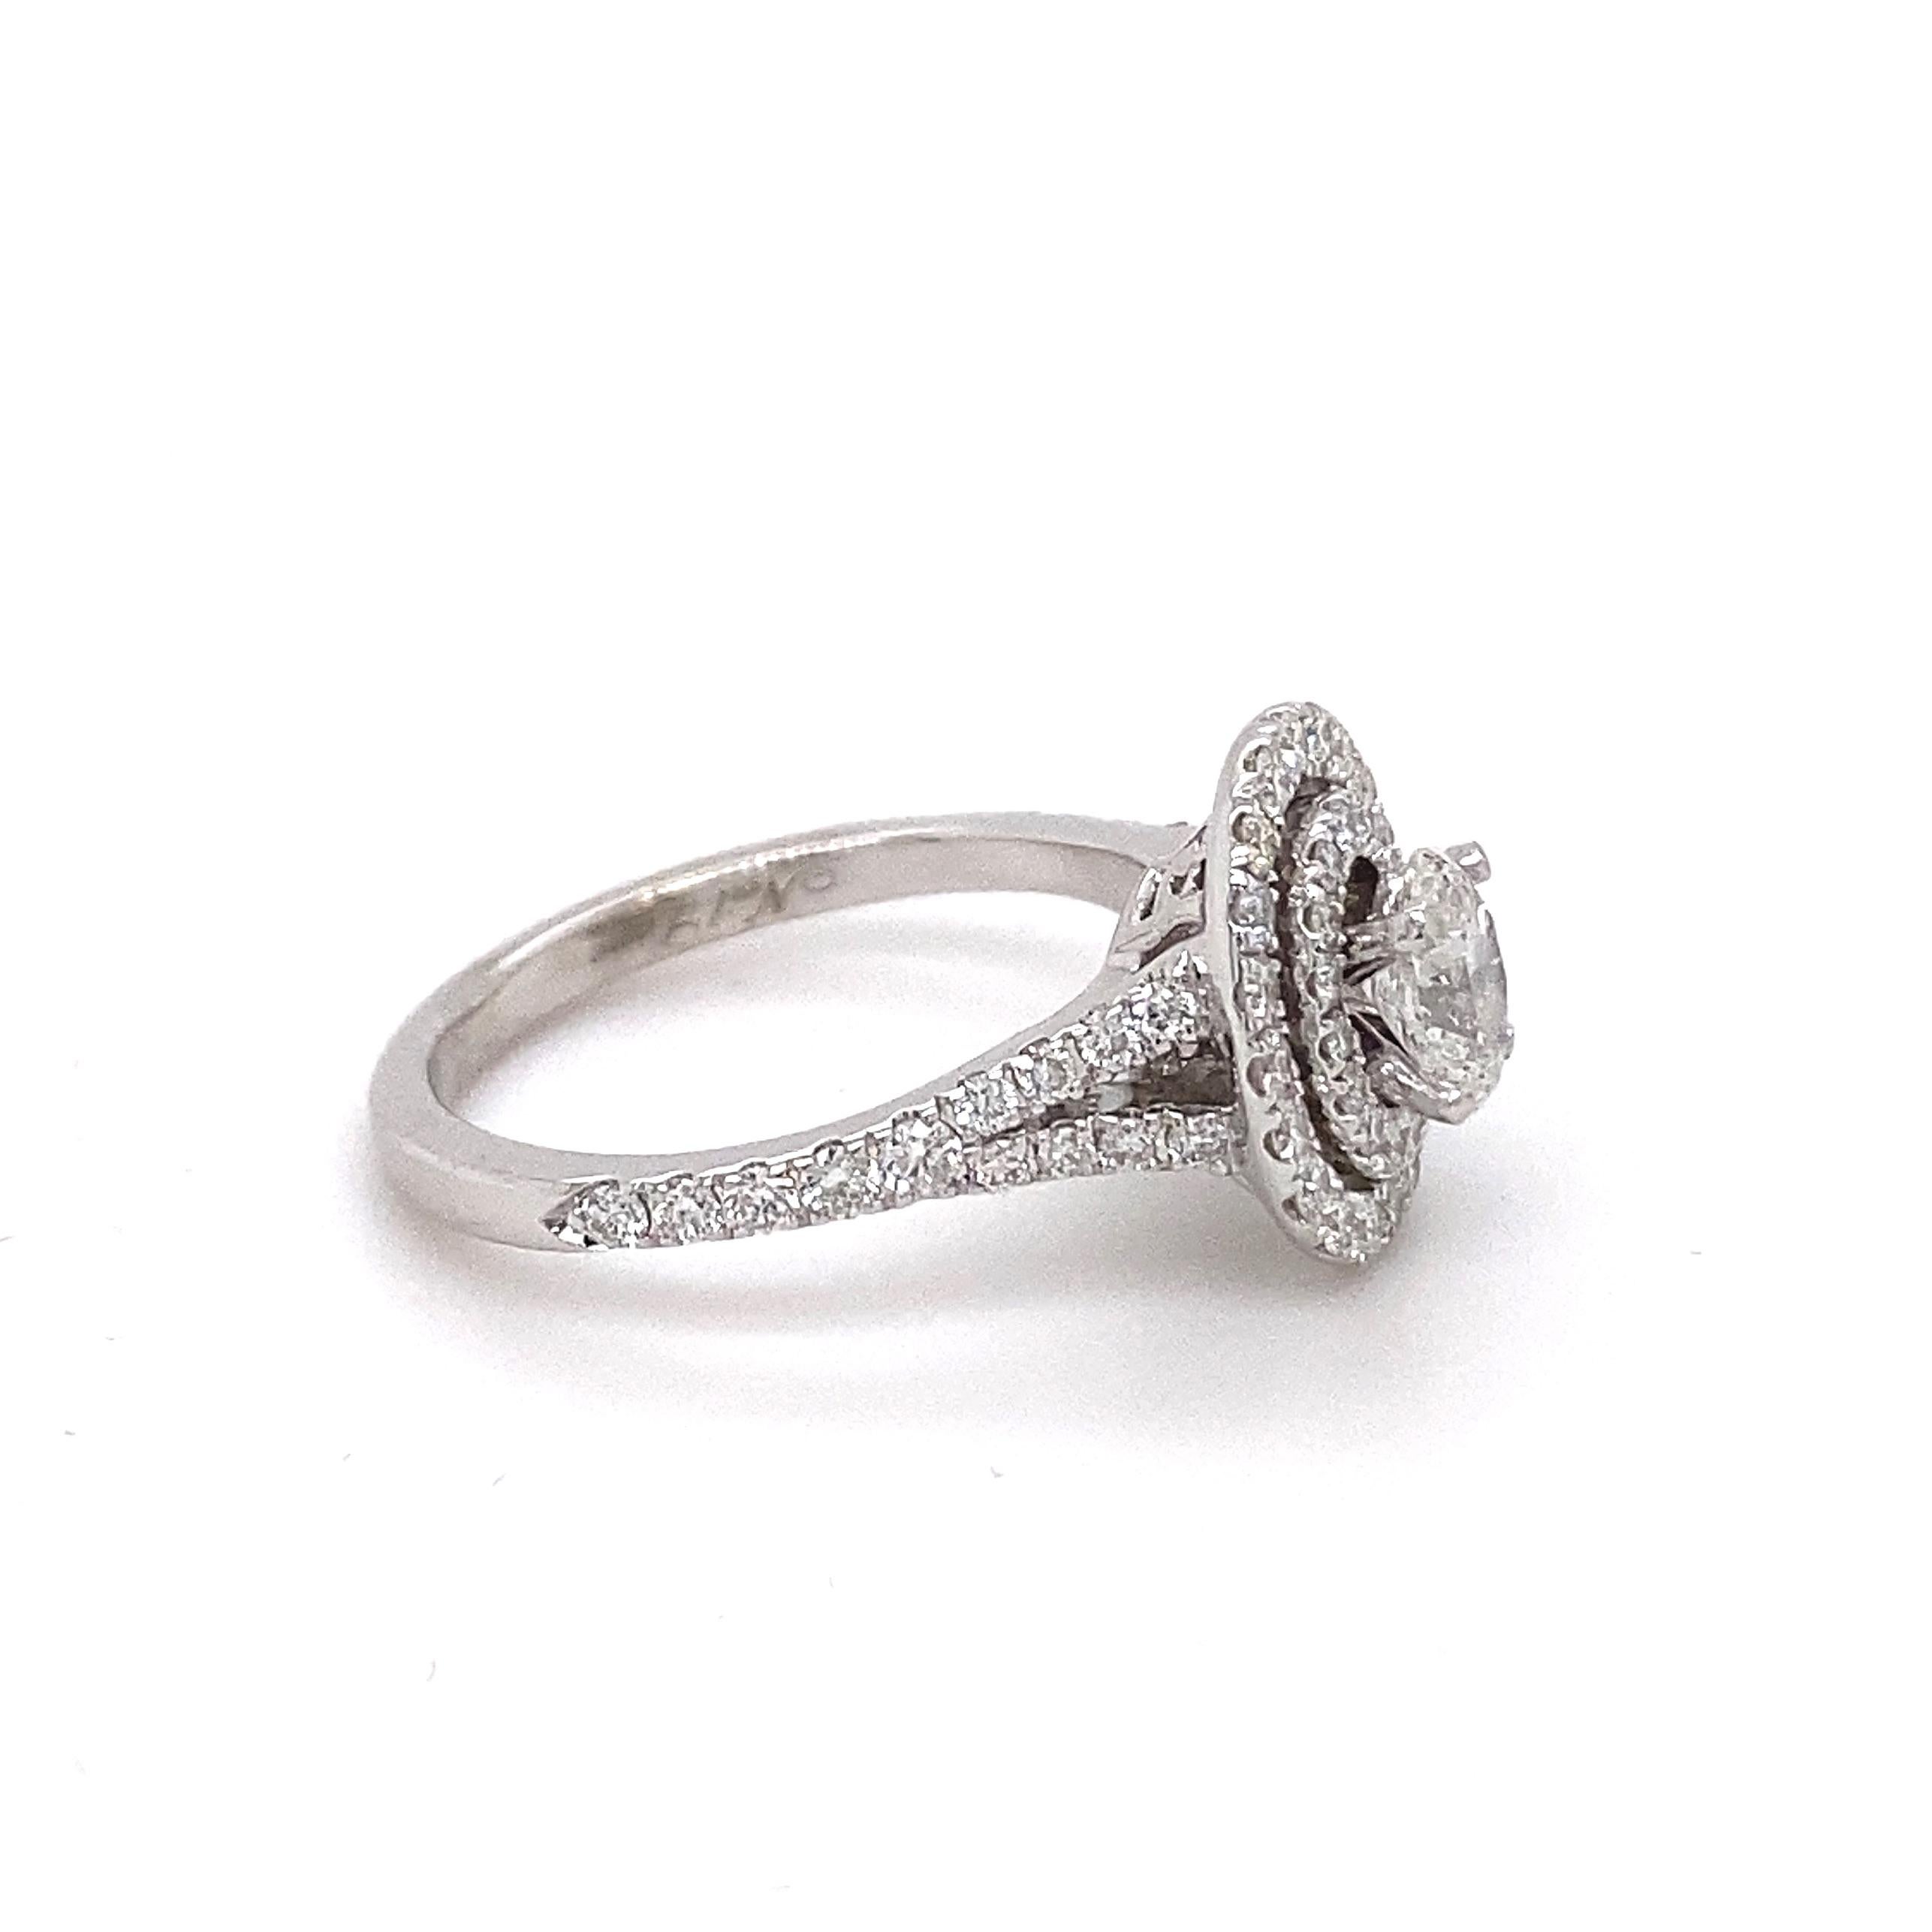 Neil Lane Bridal Oval Diamond Engagement Ring
Style:  Double Halo
Metal:  14kt White Gold
Size:  6 - sizable
TCW:  1.00 tcw
Main Diamond:  Oval Cut Diamond 0.50 cts
Color & Clarity:  I, I1
Accent Diamonds:   62 Round Brilliant Diamonds 0.50